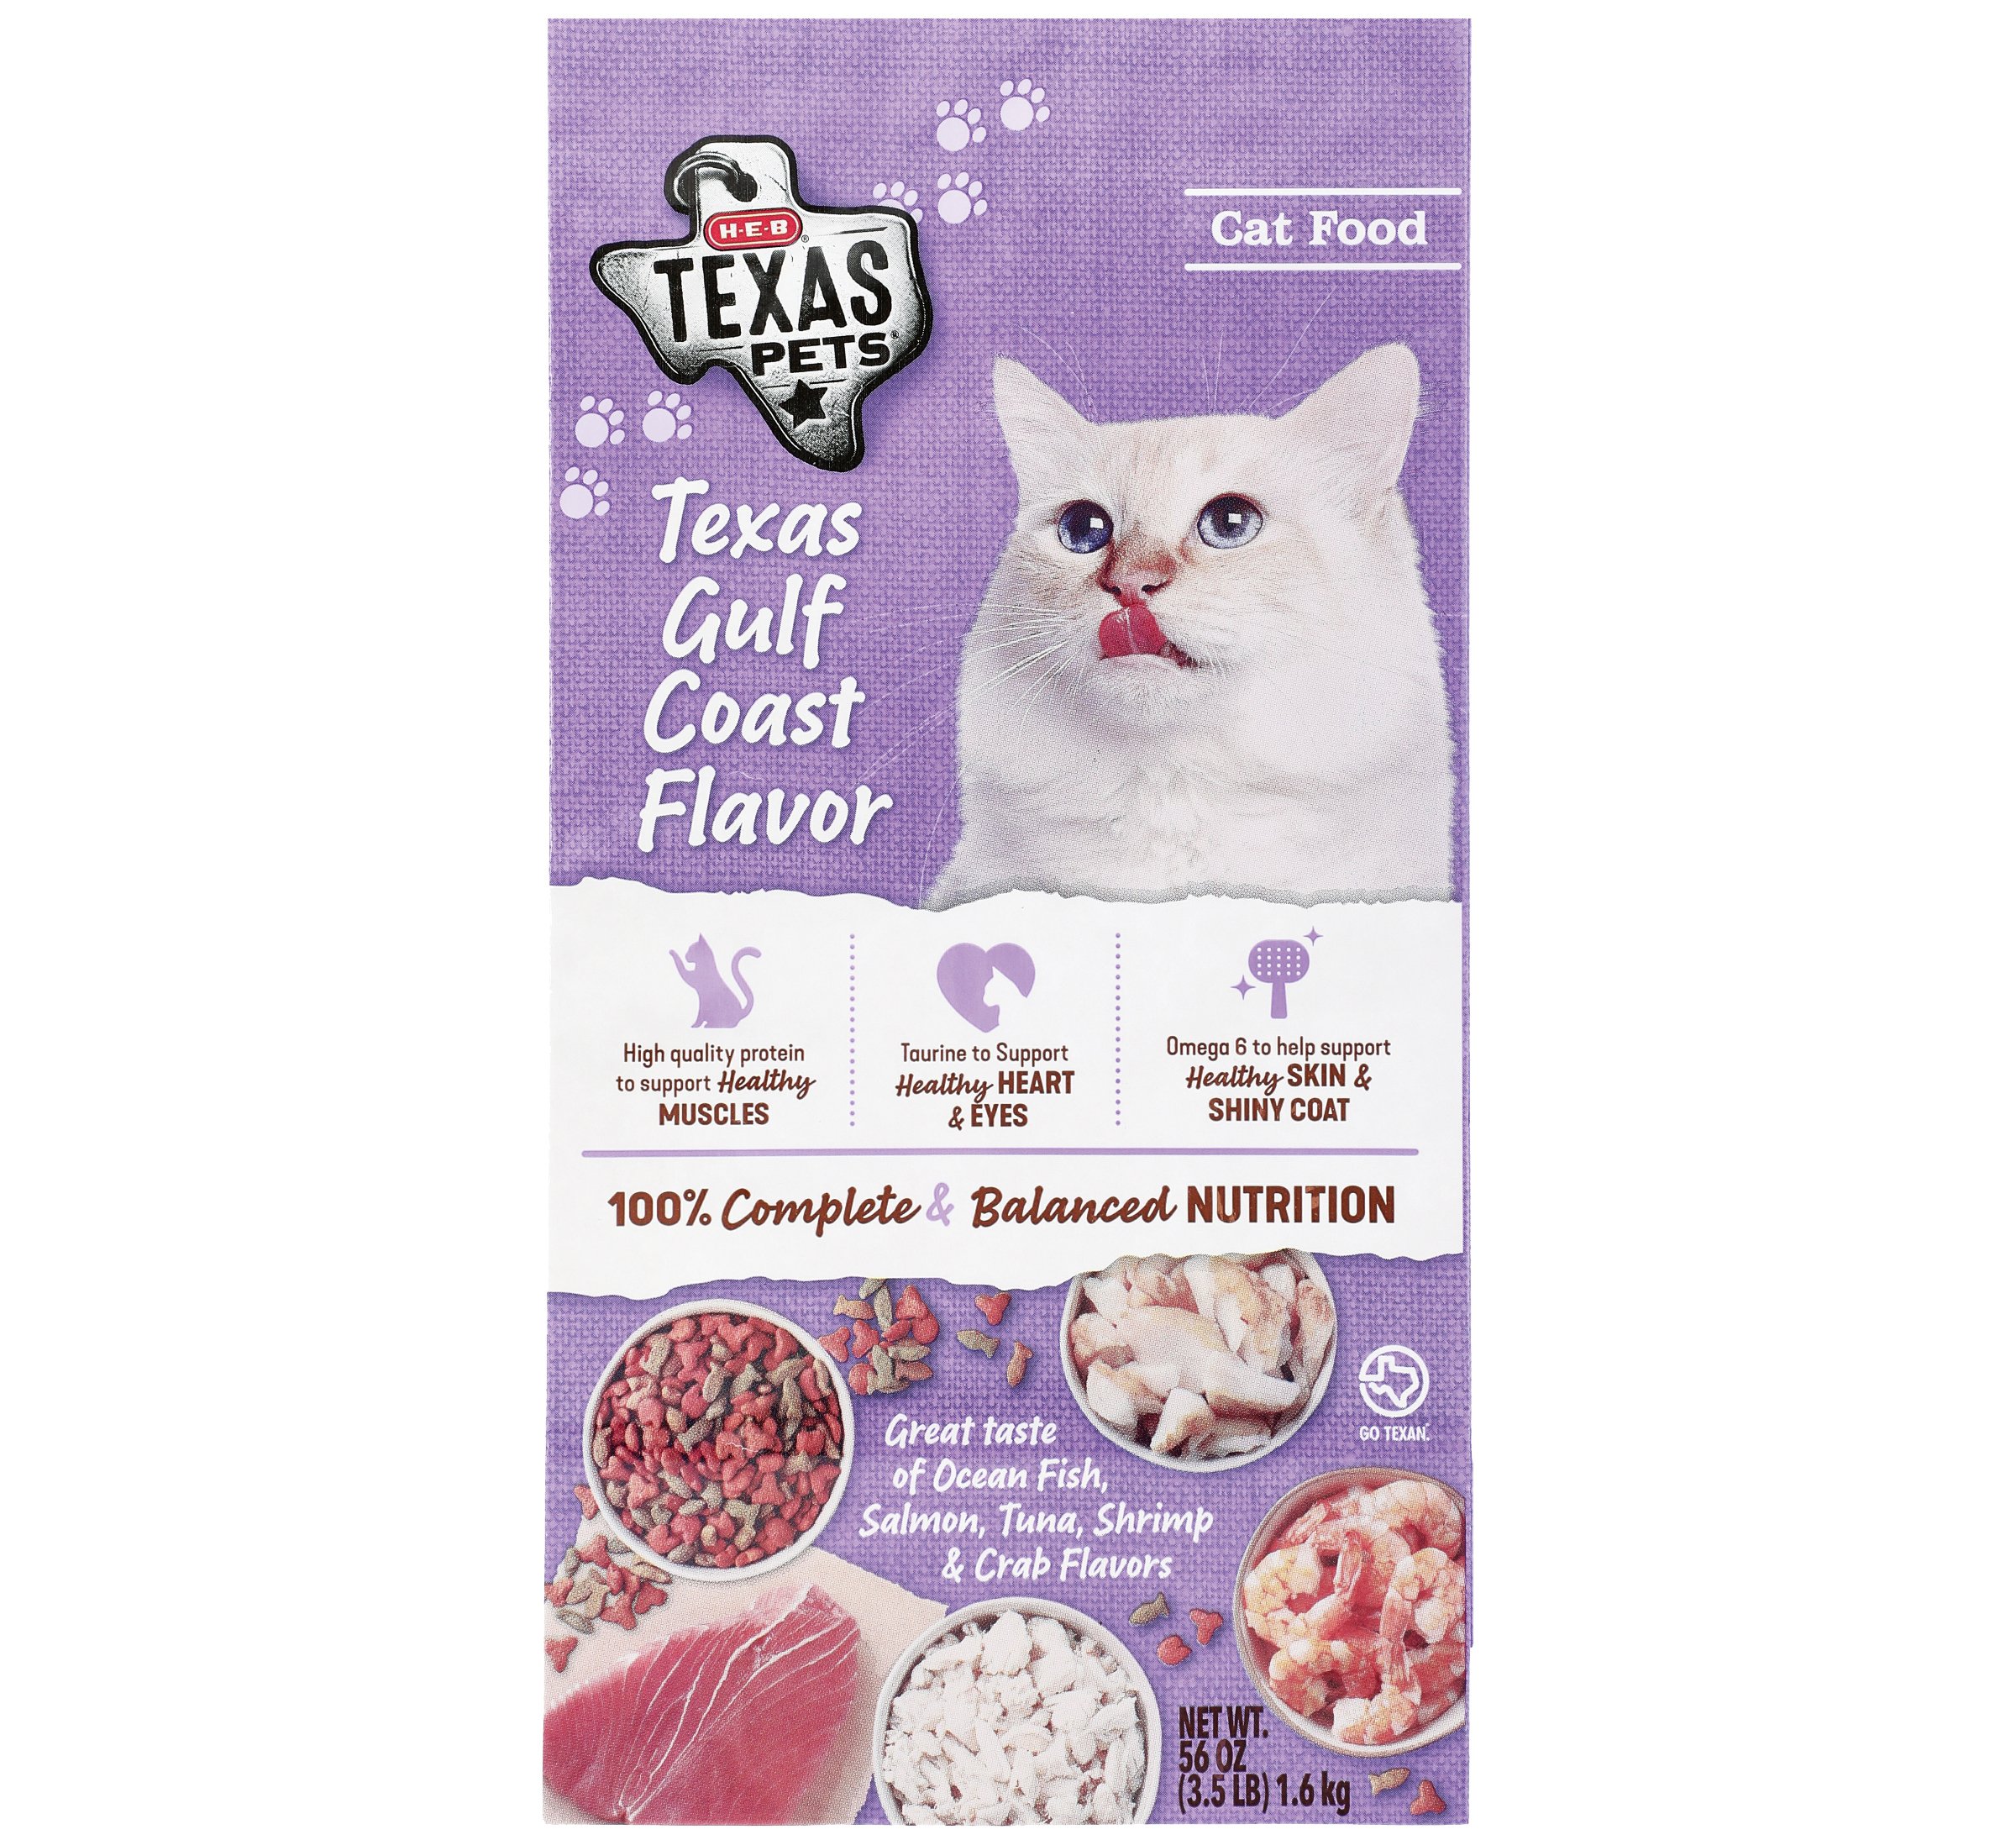 HEB Texas Pets Texas Gulf Coast Dry Cat Food Shop Food at HEB